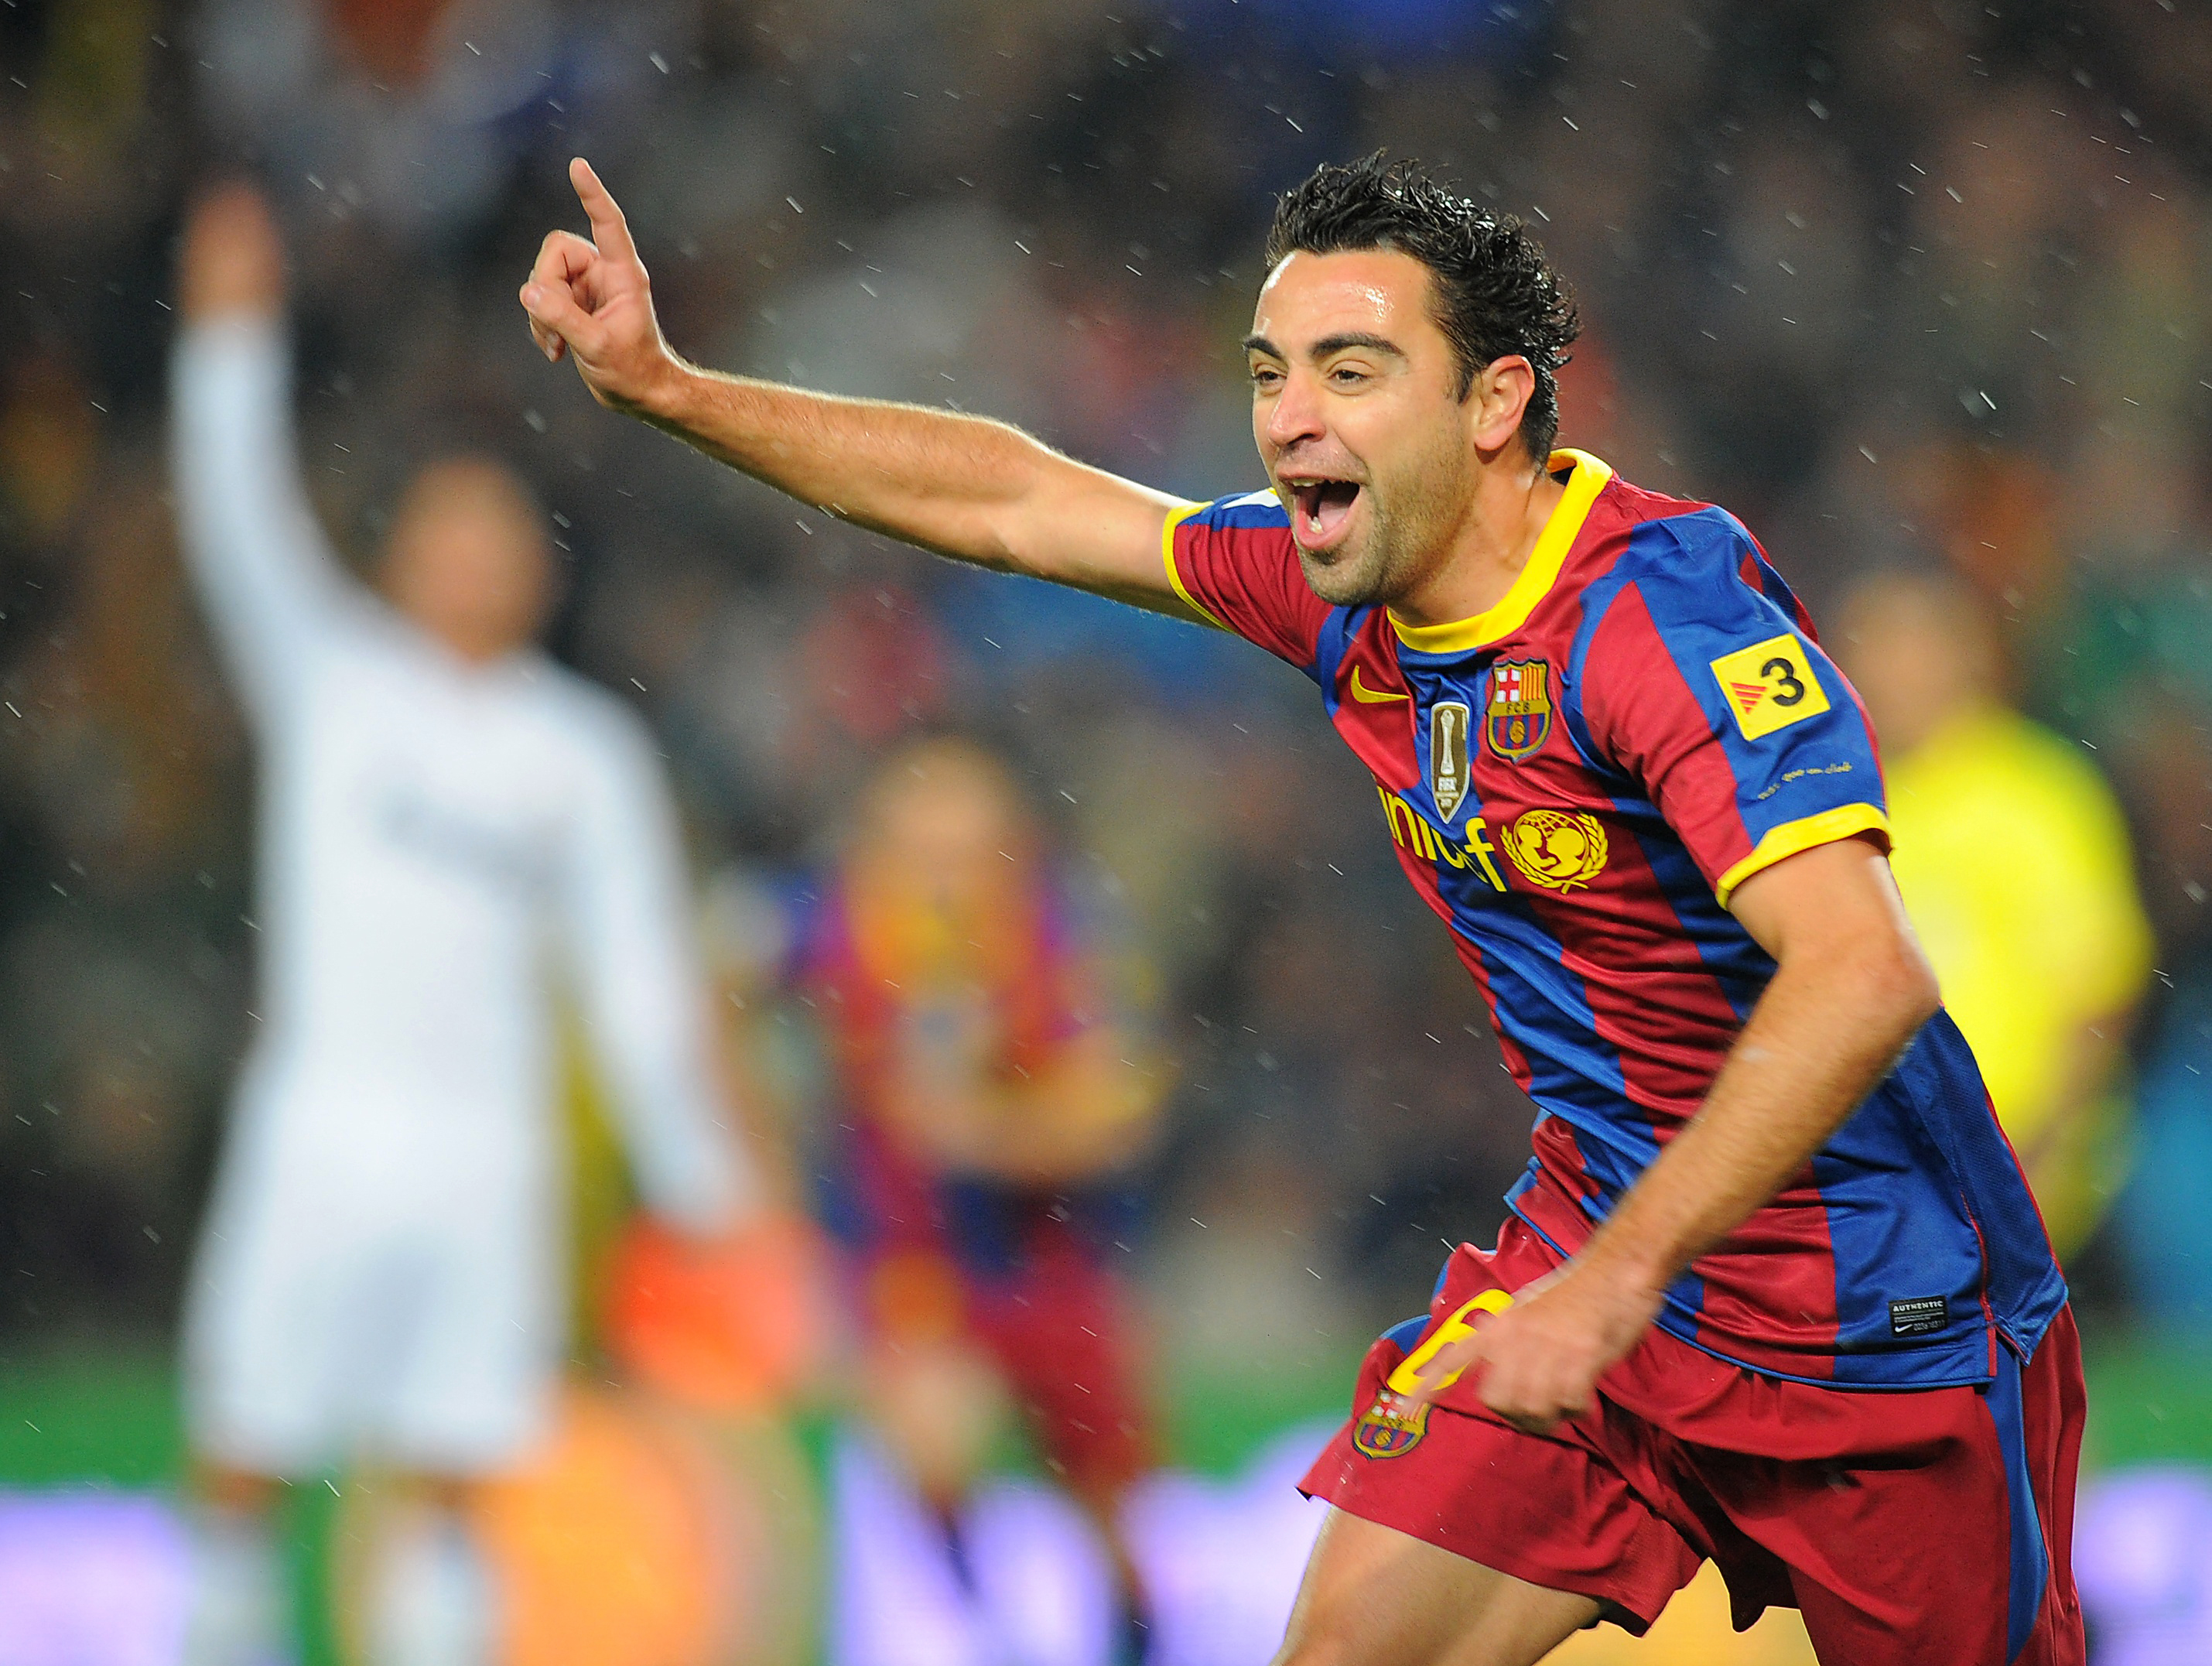 Xavi celebrates after scoring for Barcelona against Real Madrid in November 2010.